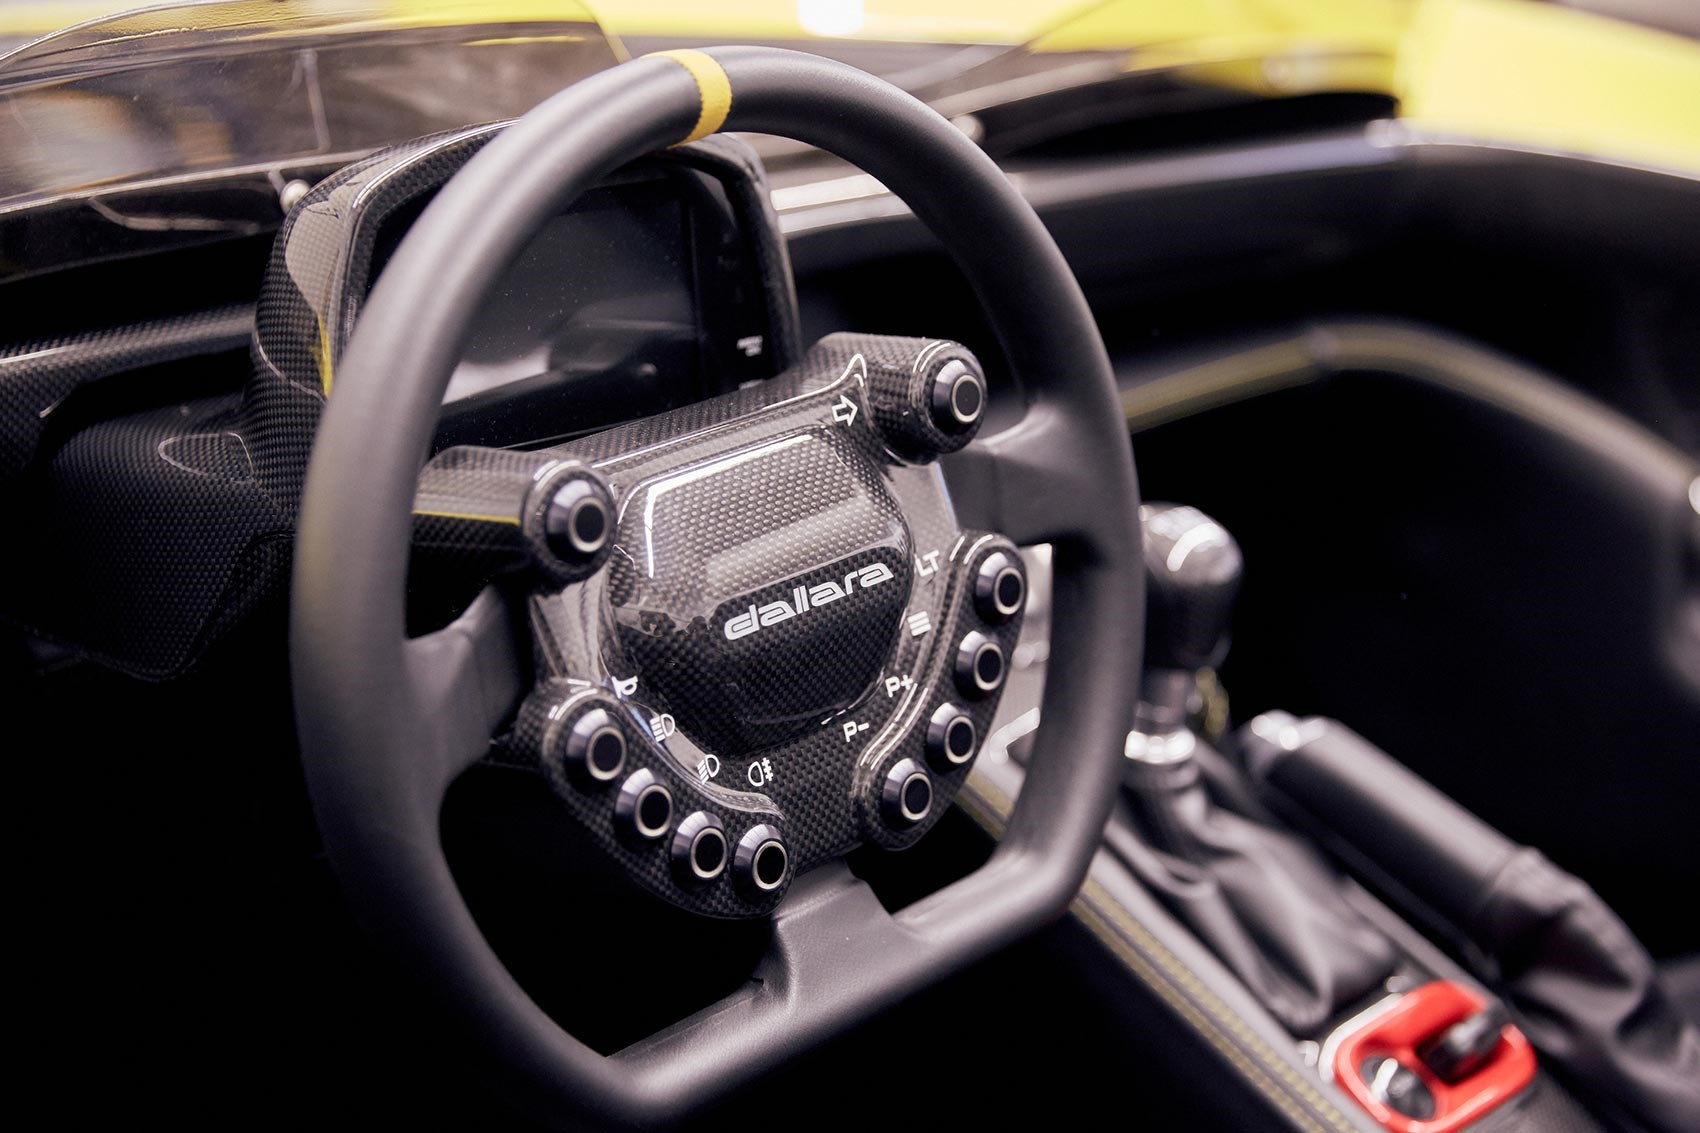 Dallara Stradale interior: a very focused cockpit